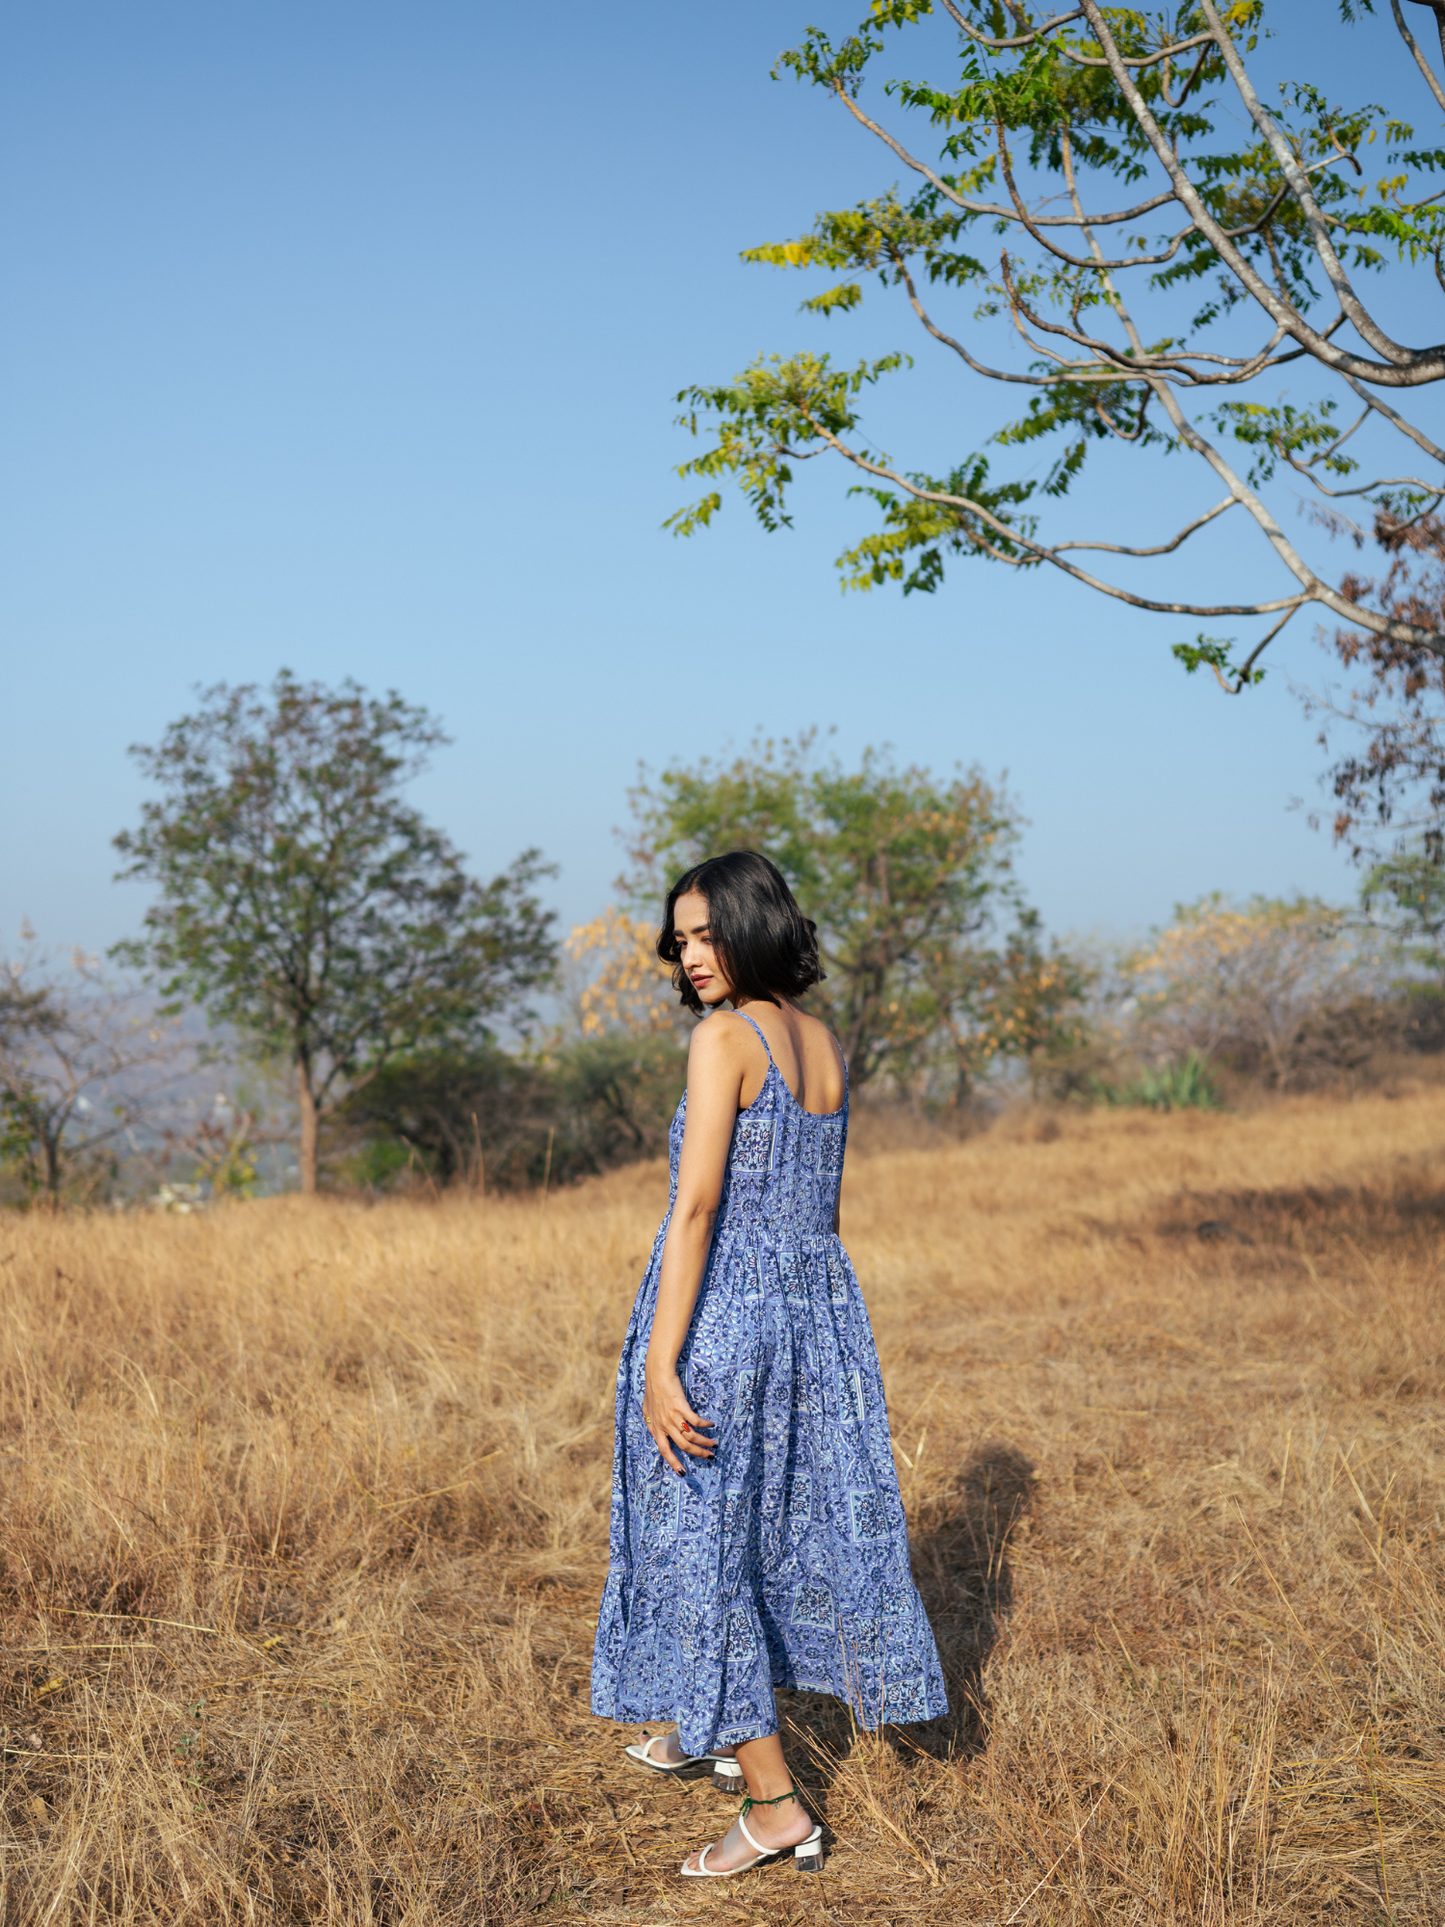 Jodhpur Dress - Hand-block Printed Cotton Dress